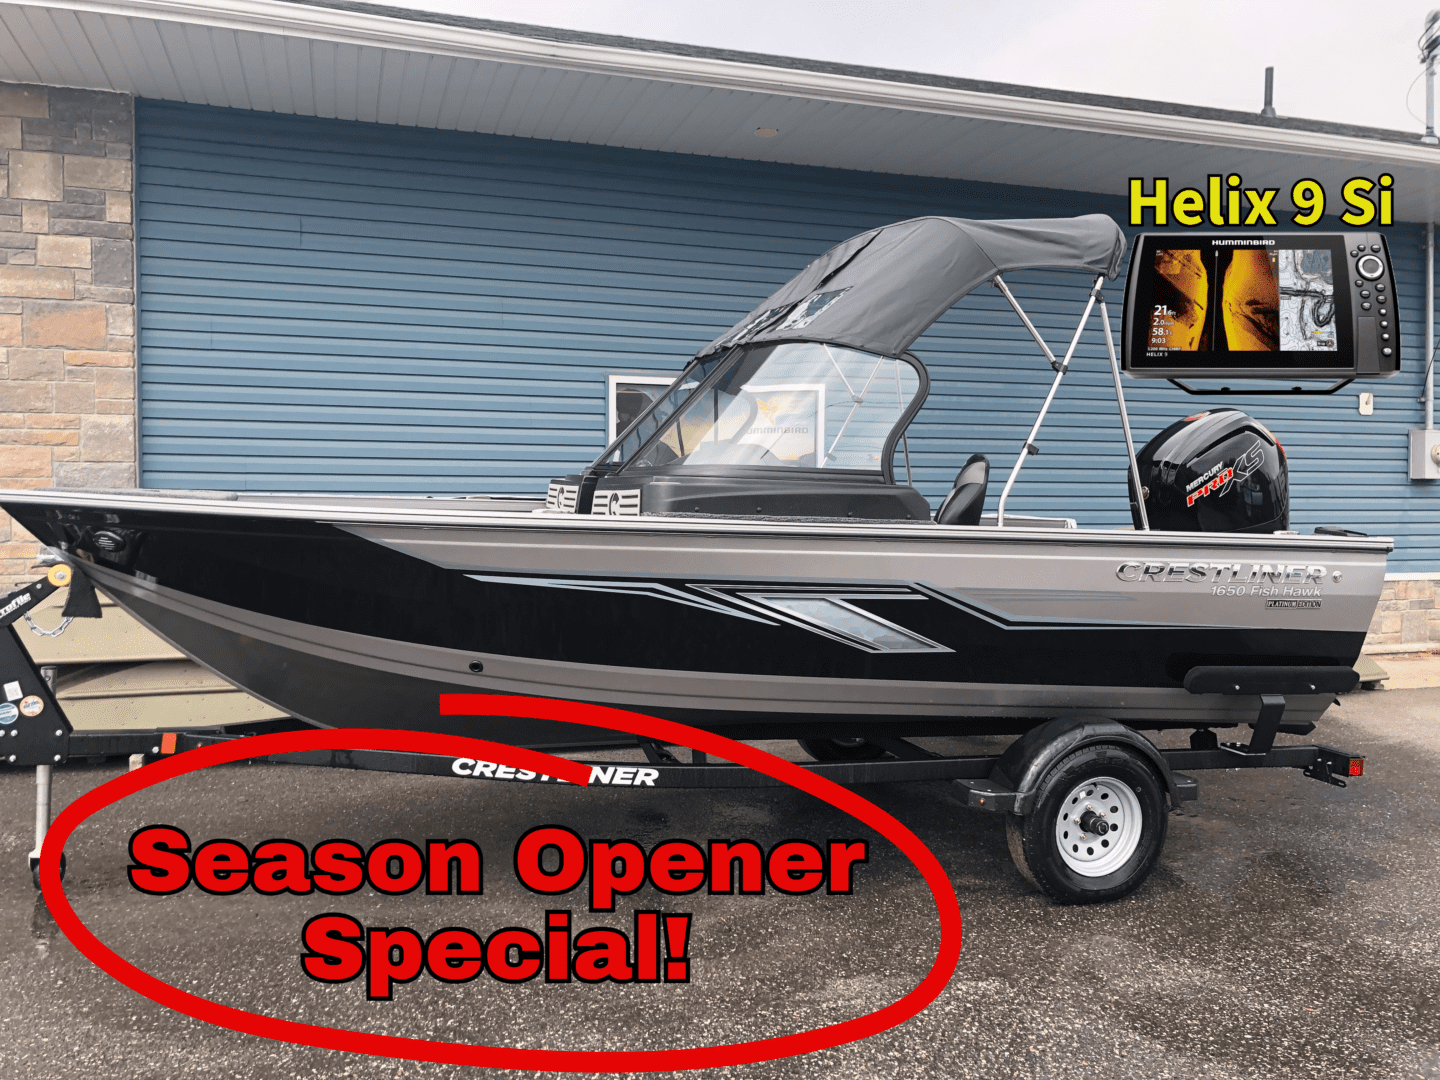 Season Opener 1650 Fish Hawk